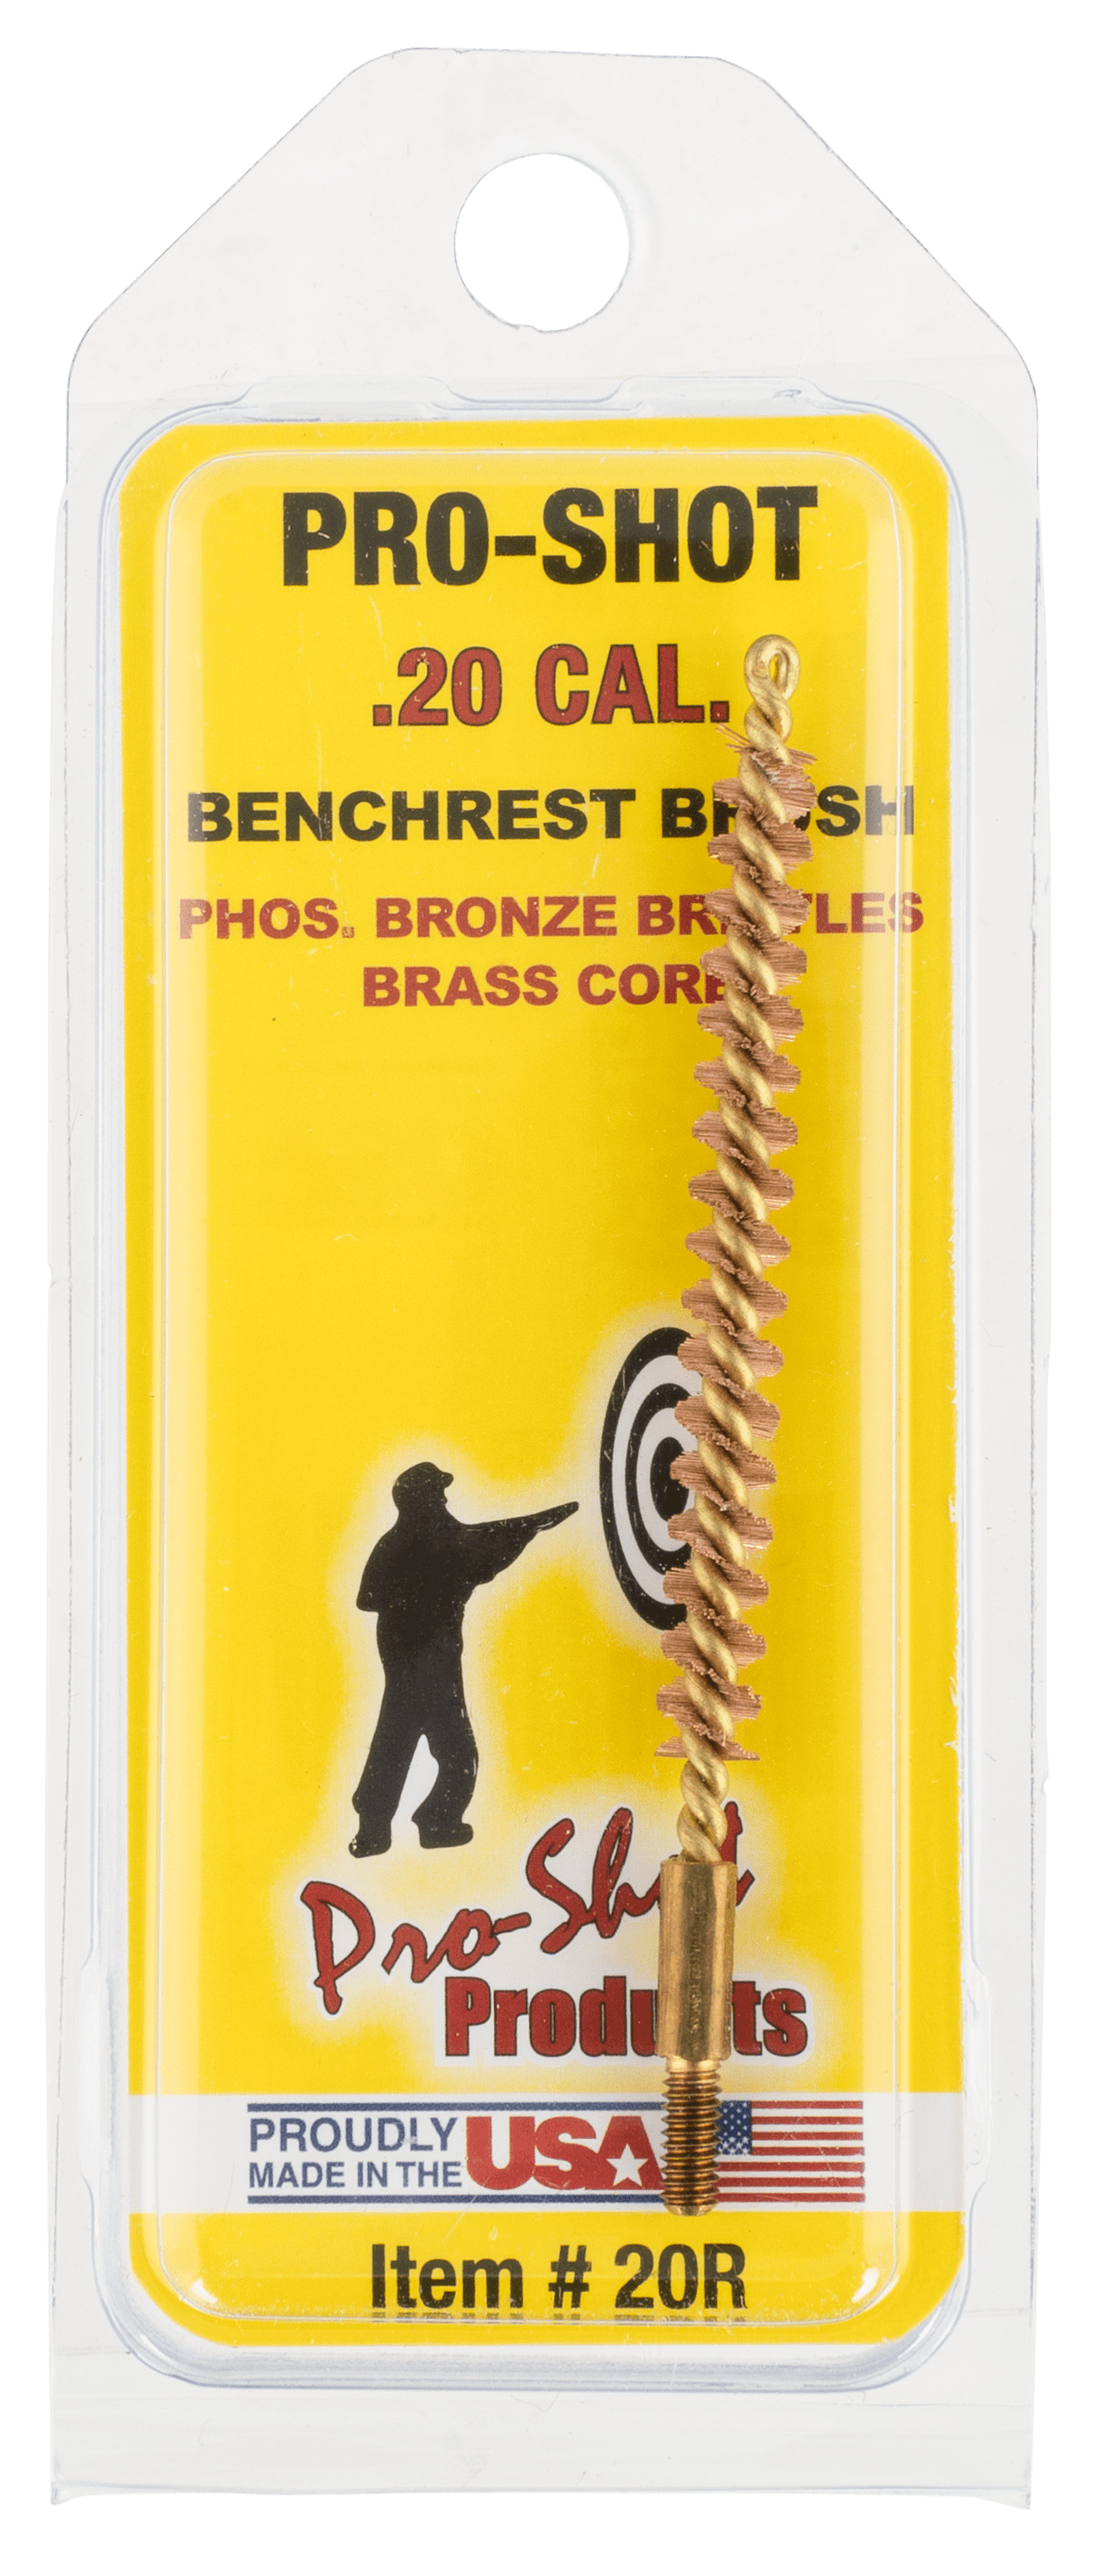 Pro-Shot Products Pro-shot Brush 20cal Rifle Bronze Cleaning Equipment